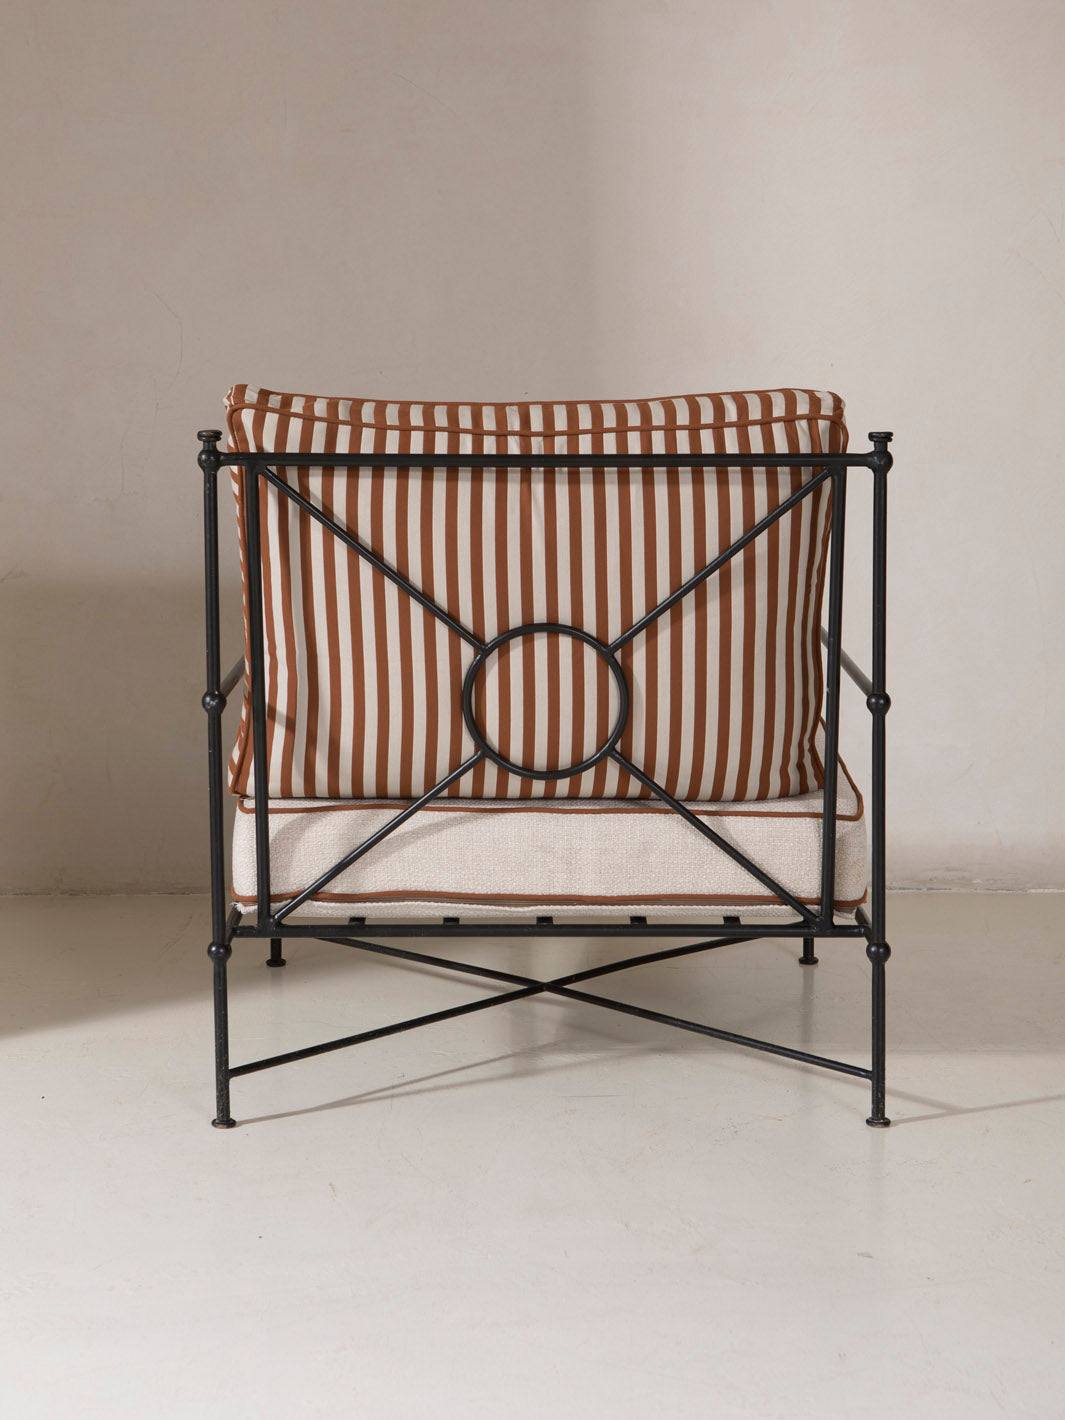 Wrought iron Medaillon furniture